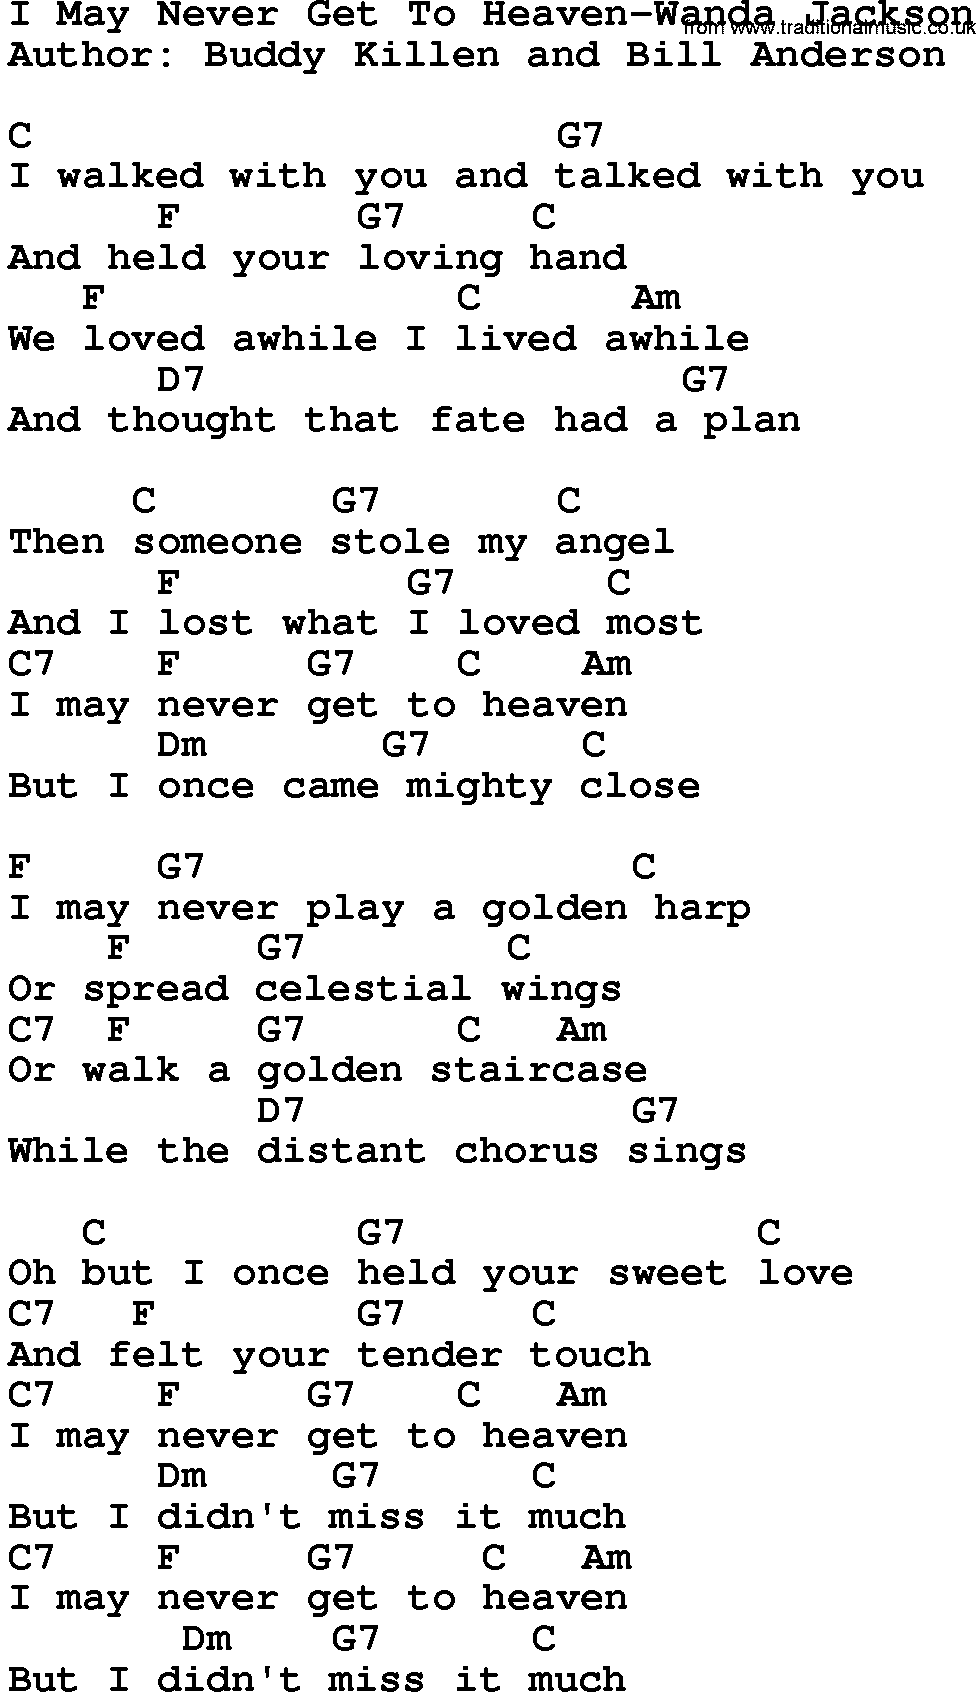 Country music song: I May Never Get To Heaven-Wanda Jackson lyrics and chords